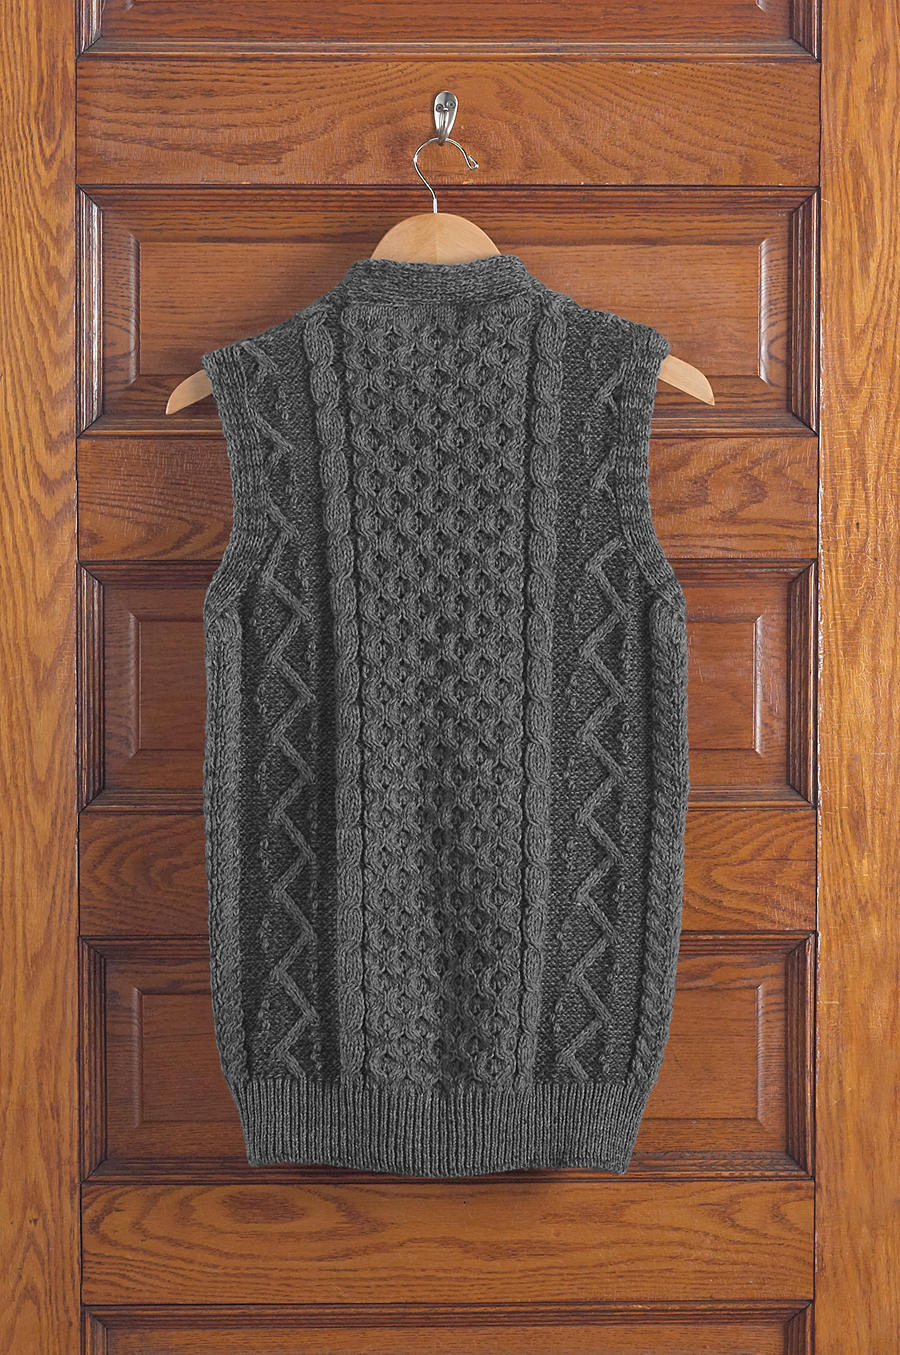 Product image for Men's Aran Waistcoat: Charcoal